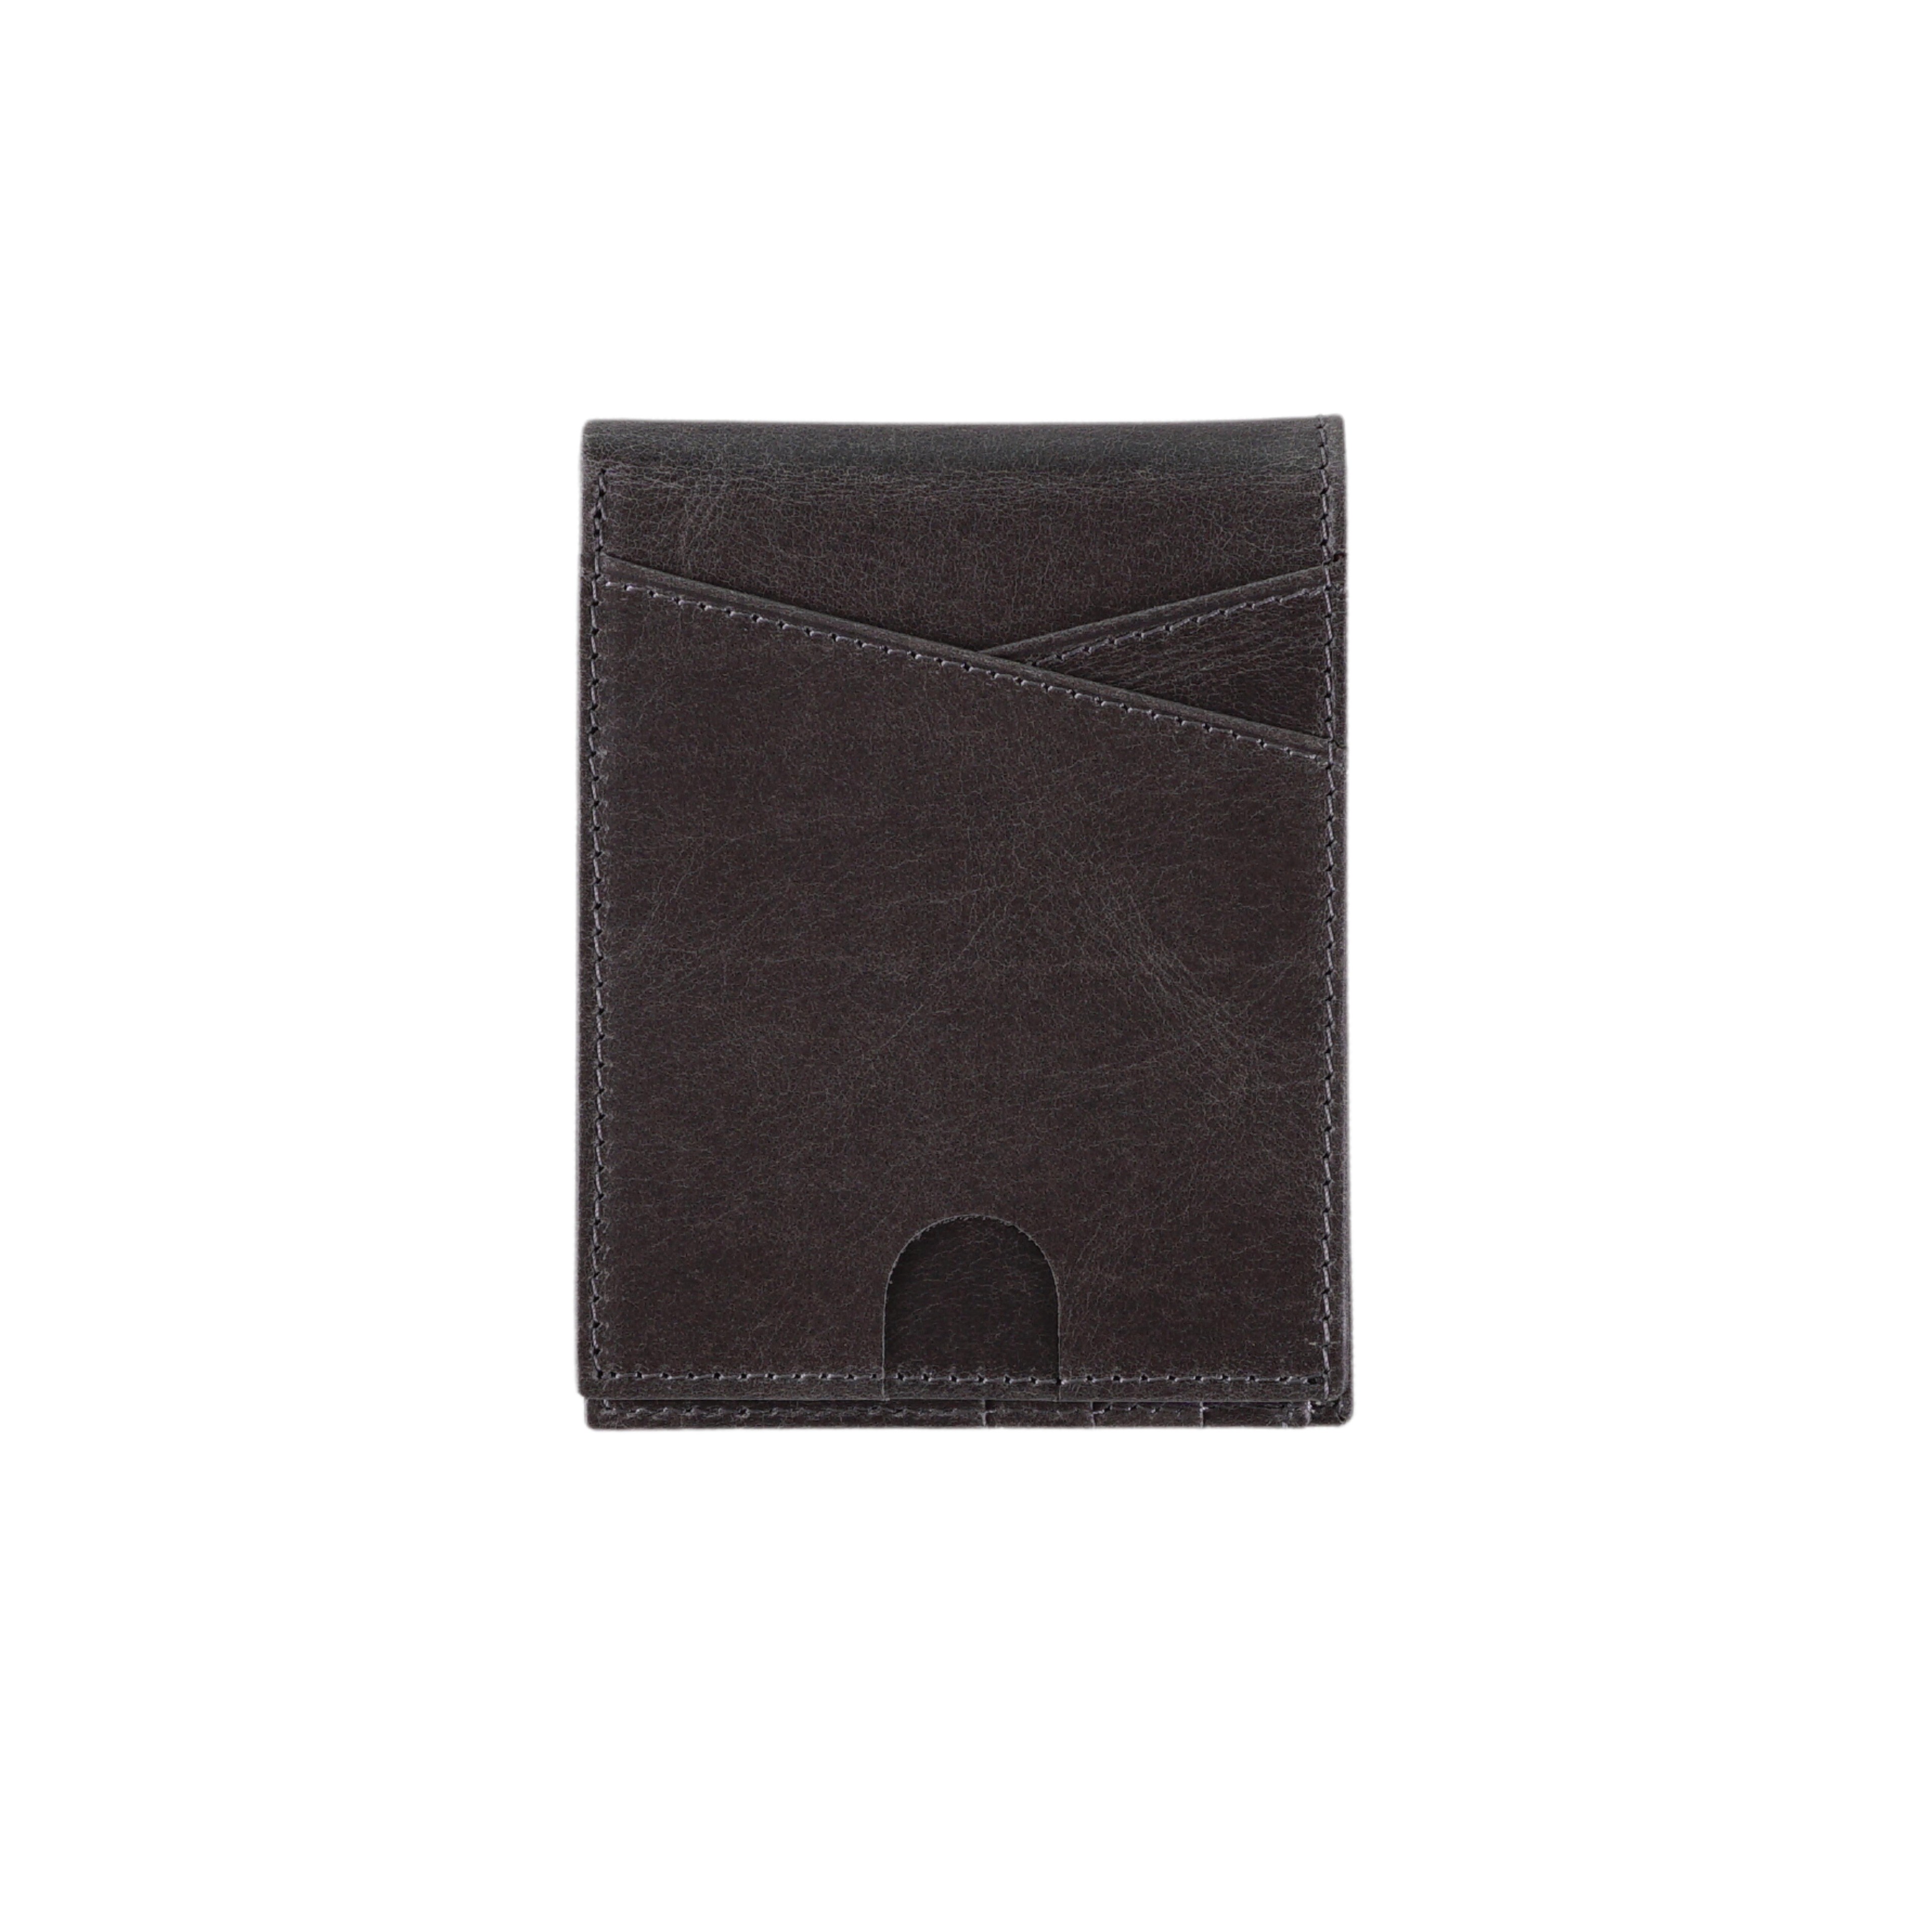 Genuine Leather Minimalist Wallet for Men - Gray